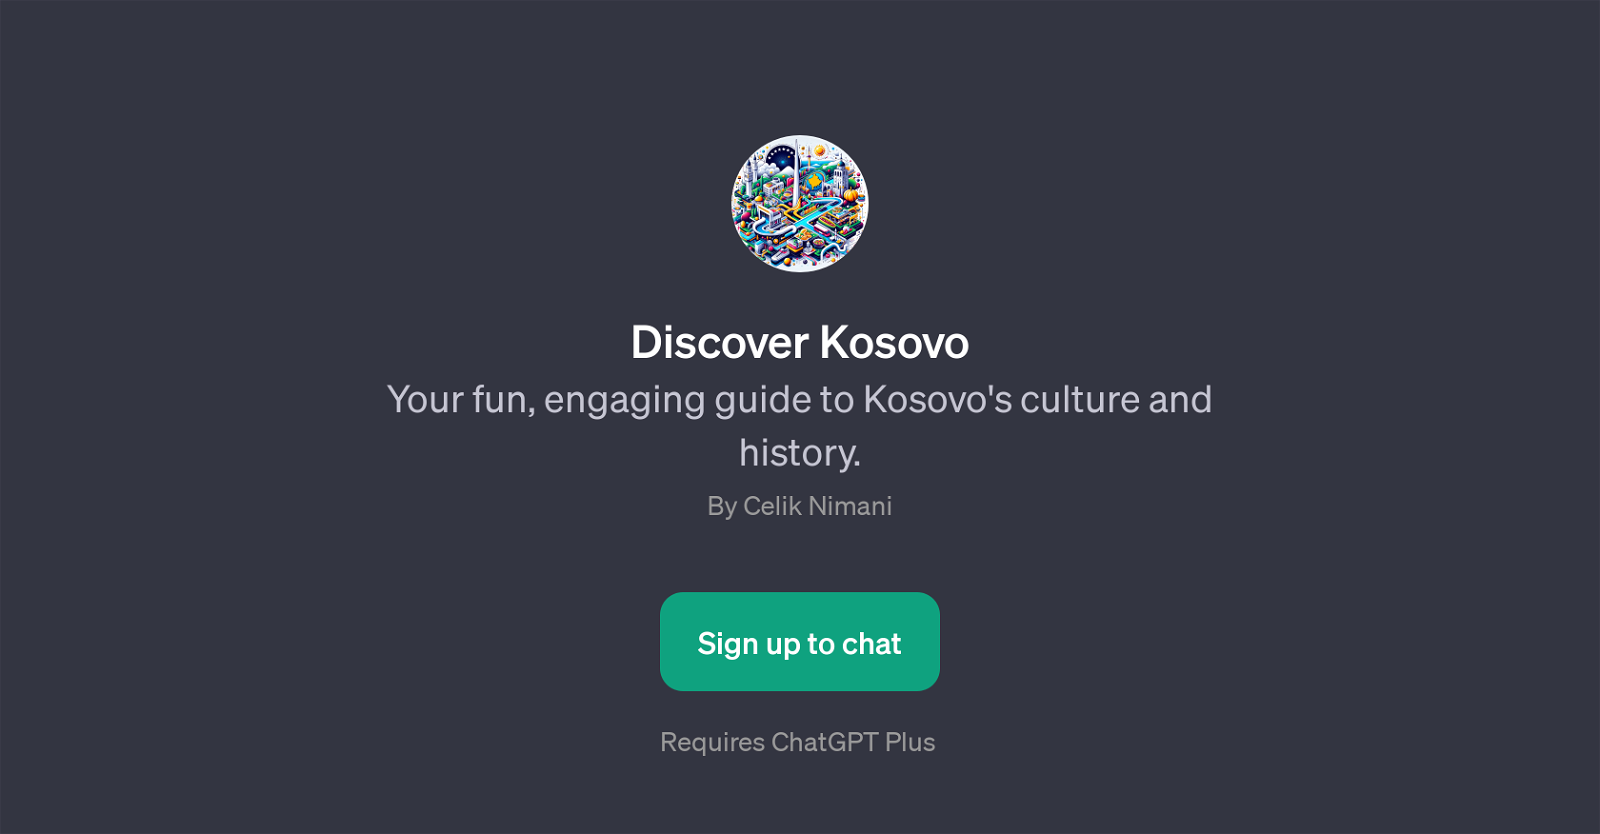 Discover Kosovo website